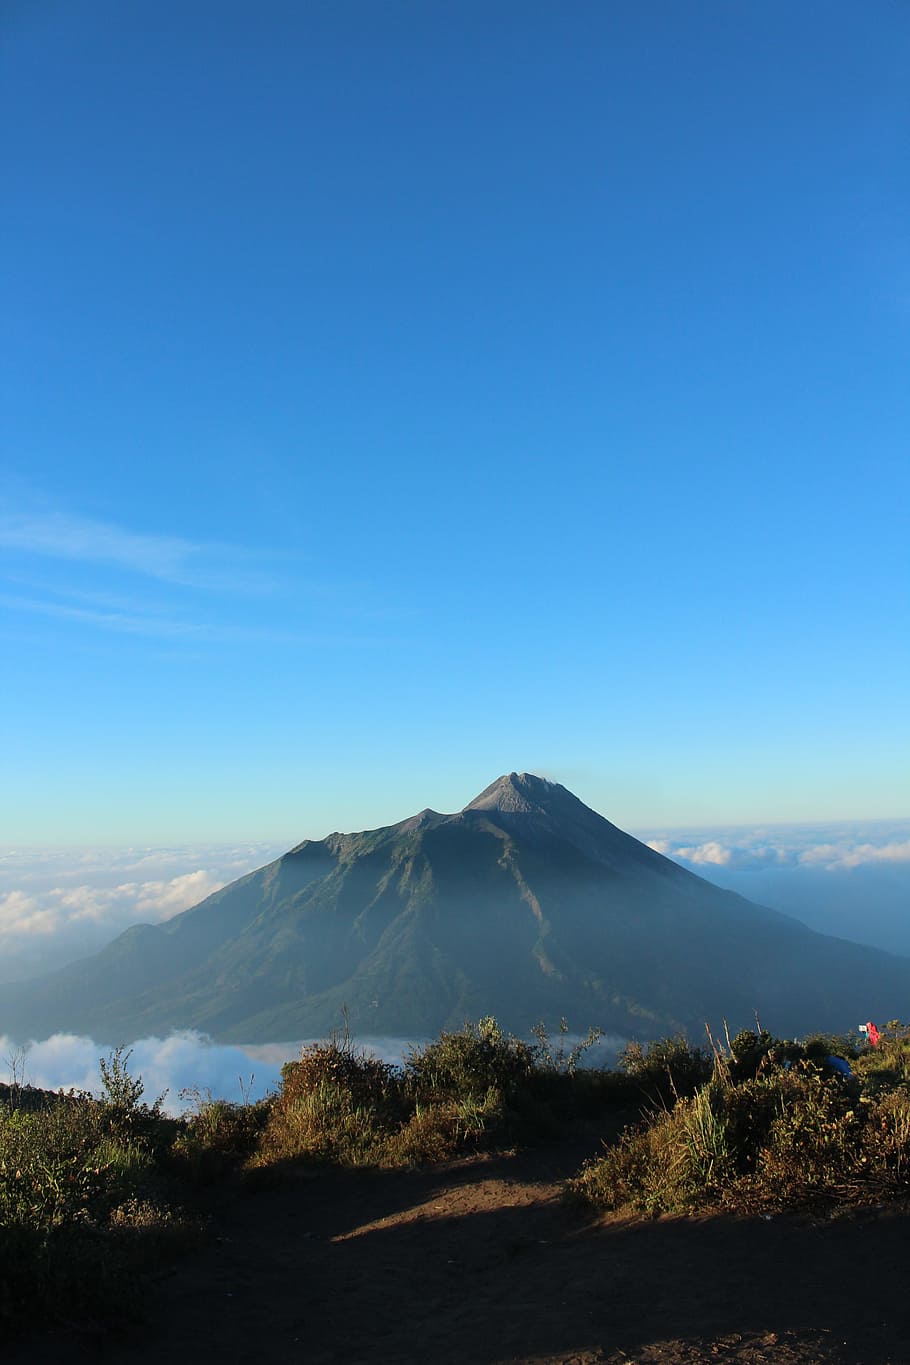 indonesian, view, merbabu, merapi, sky, mountain, scenics - nature